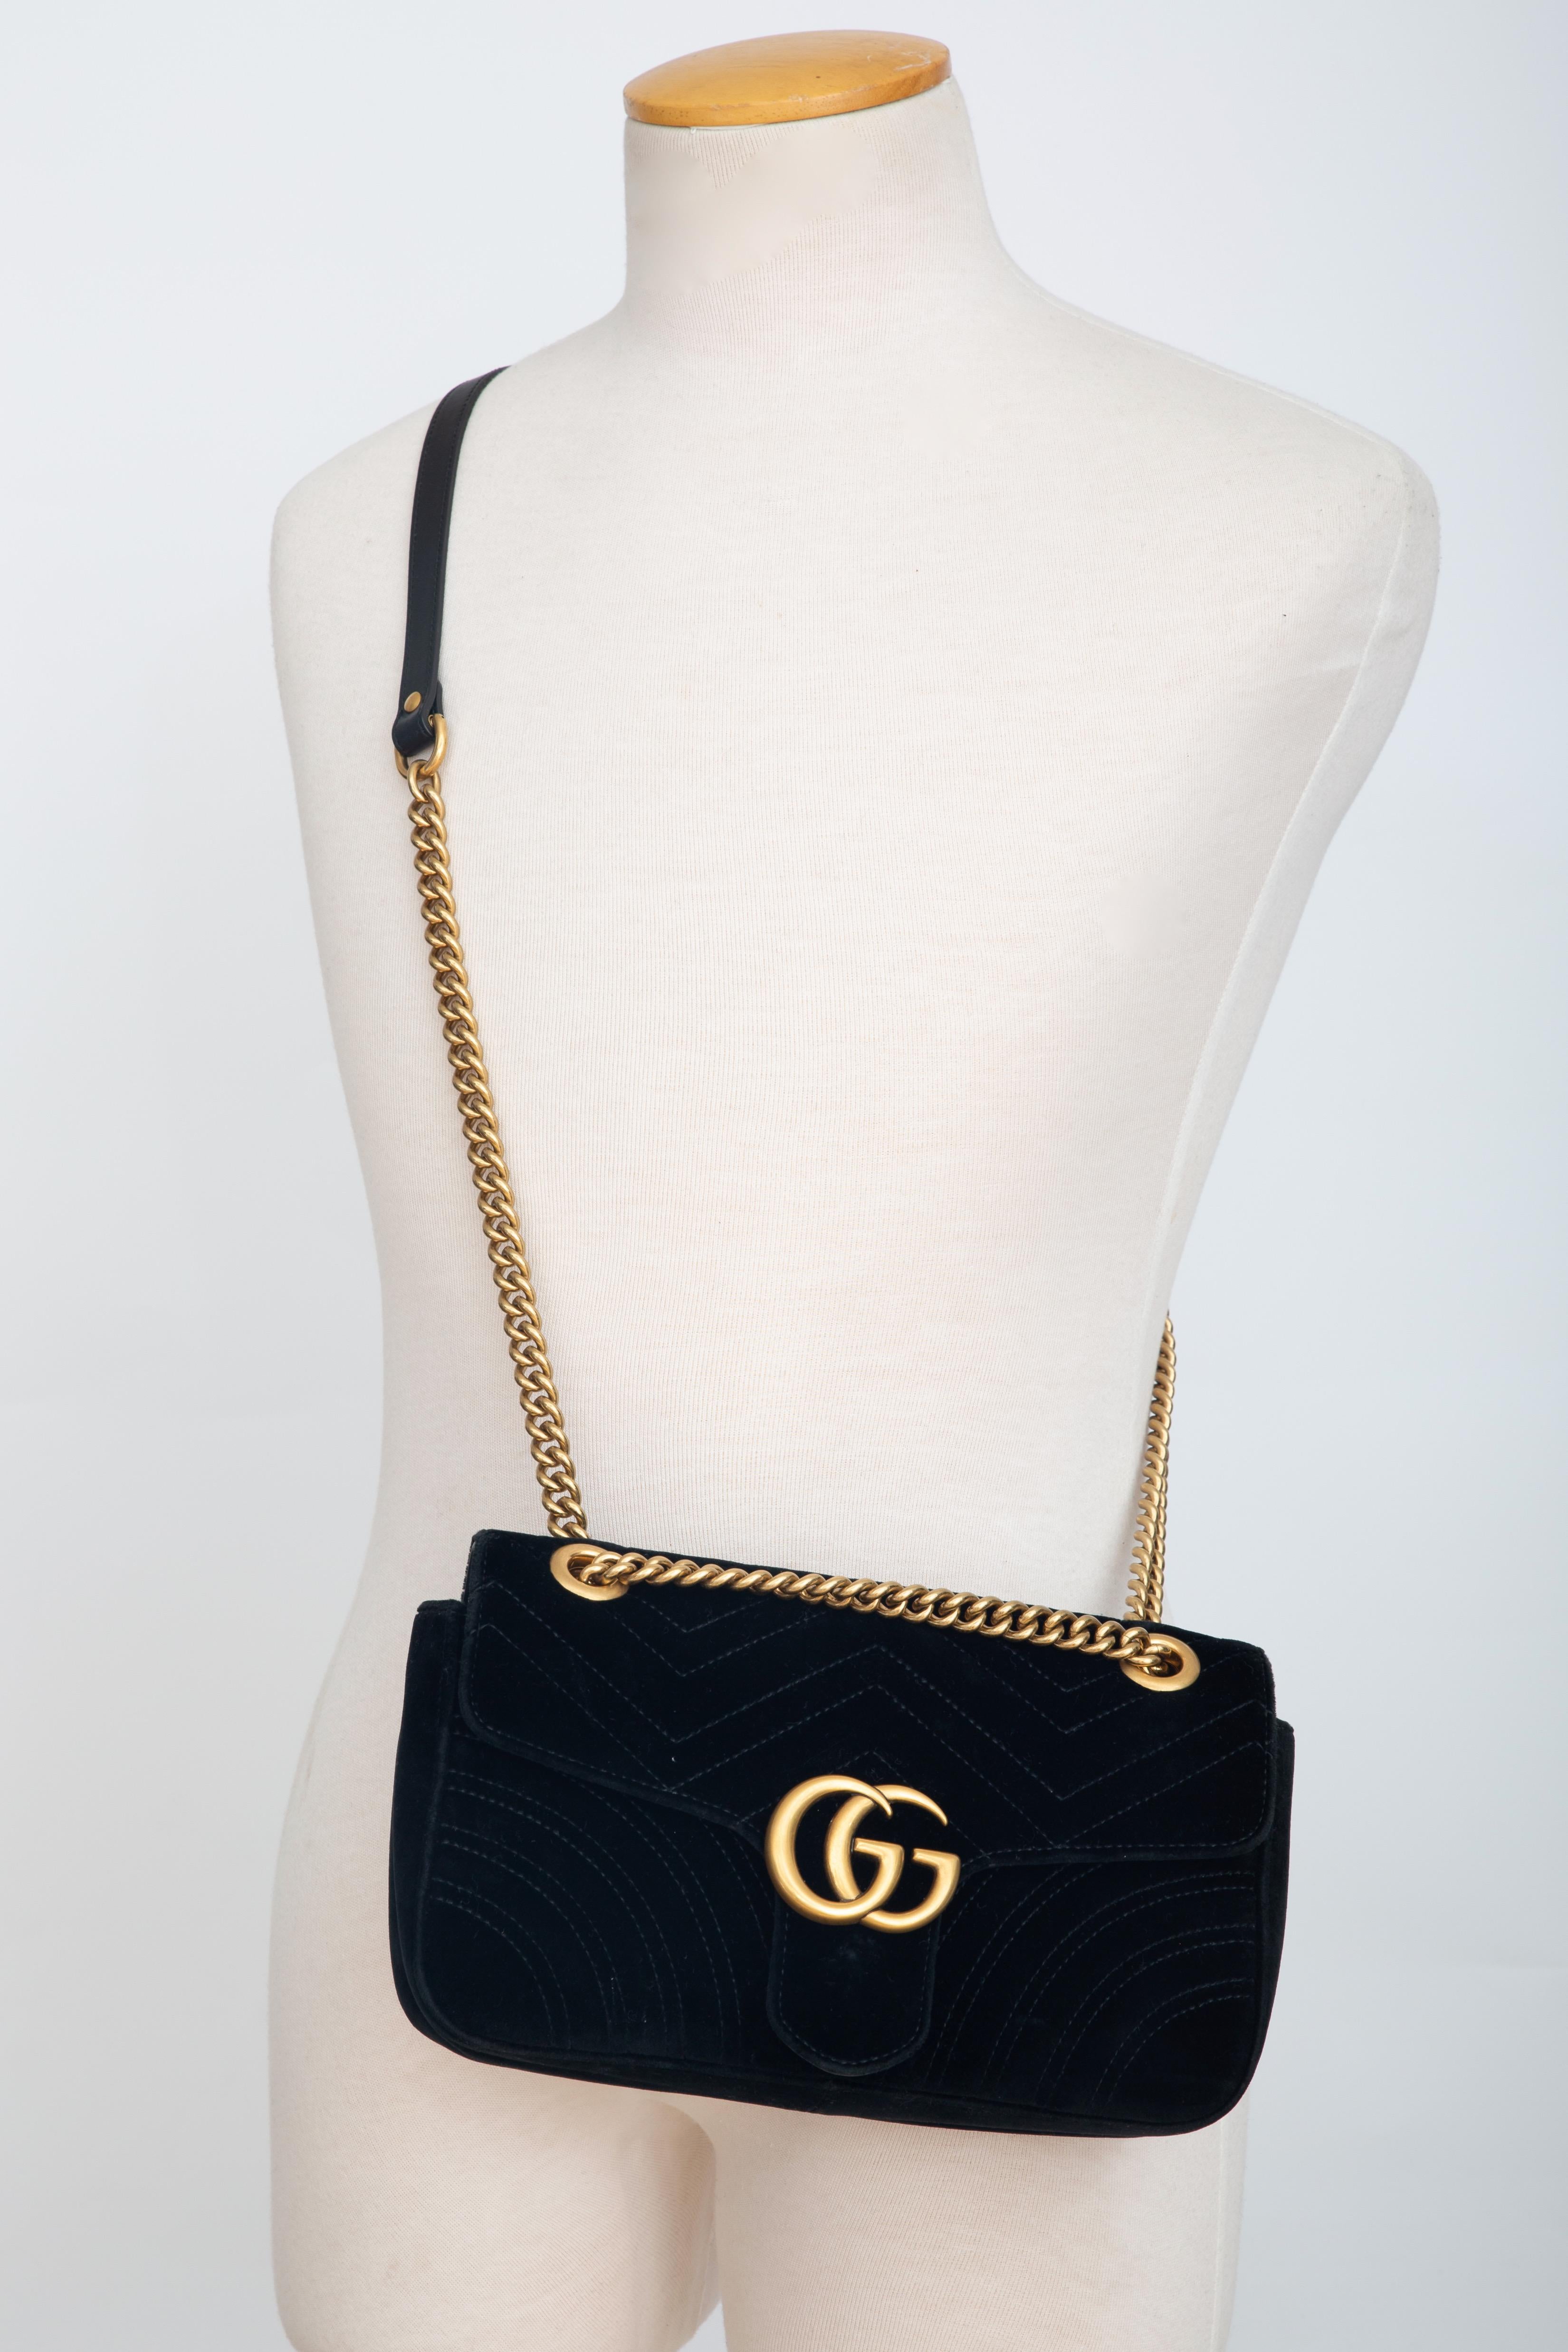 Gucci Velvet Black Matelasse Small GG Marmont Shoulder Bag (443497) 2